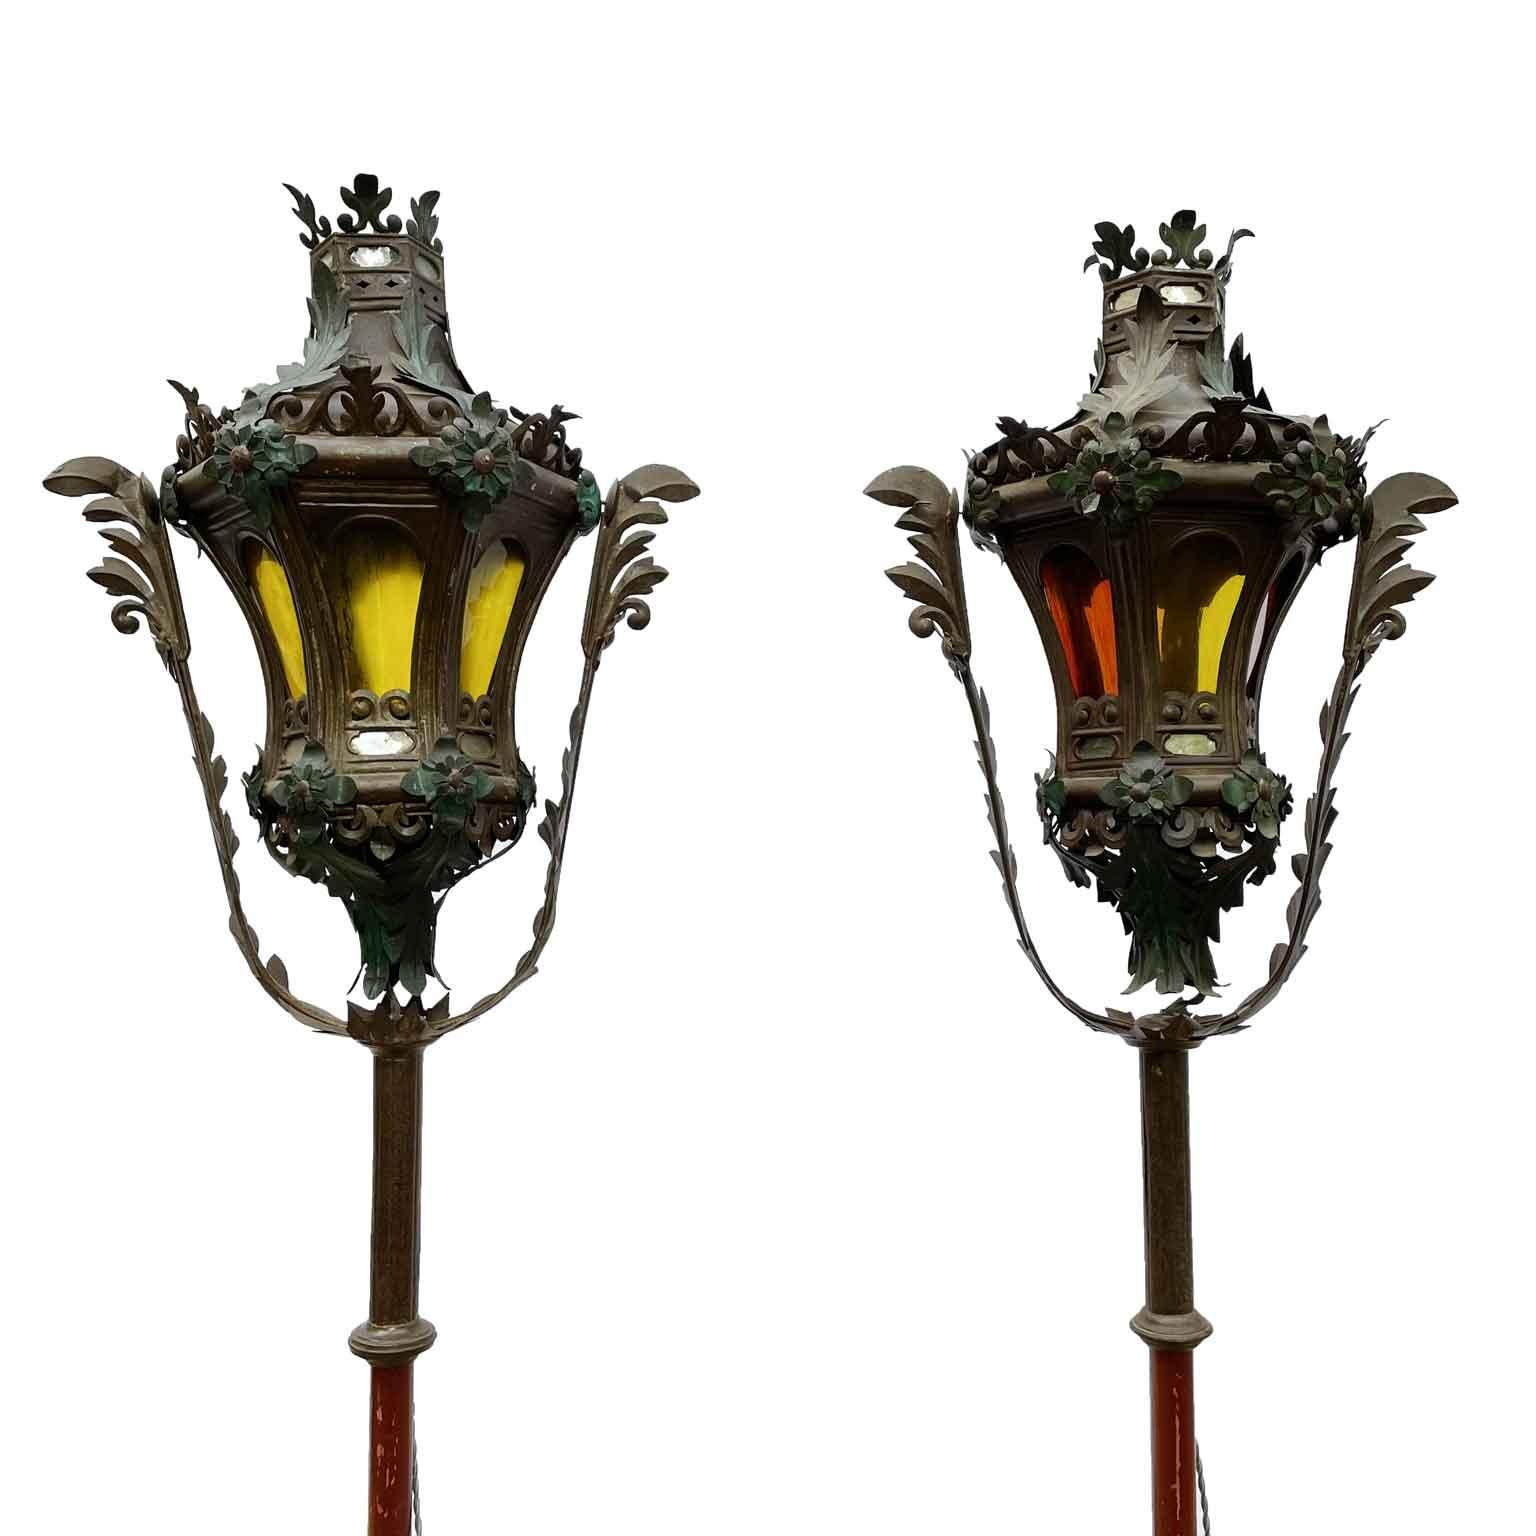 Pair of Venetian Lanterns 19th Century Italian Gondola Lamps Baroque Style 12